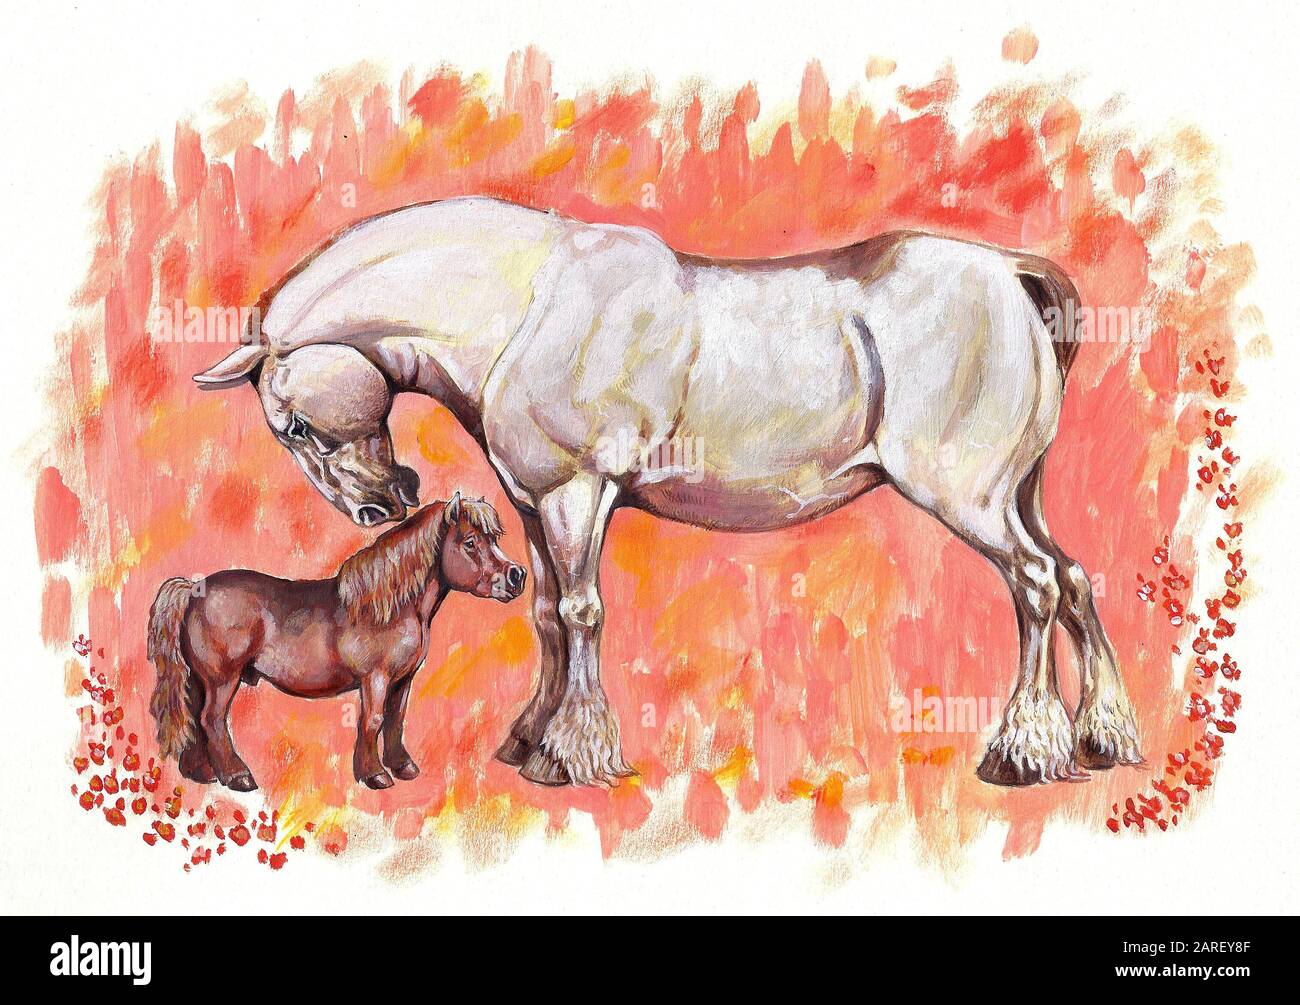 Horses in Love.  Draft horse and pony illustration. Acrylic painting. Stock Photo